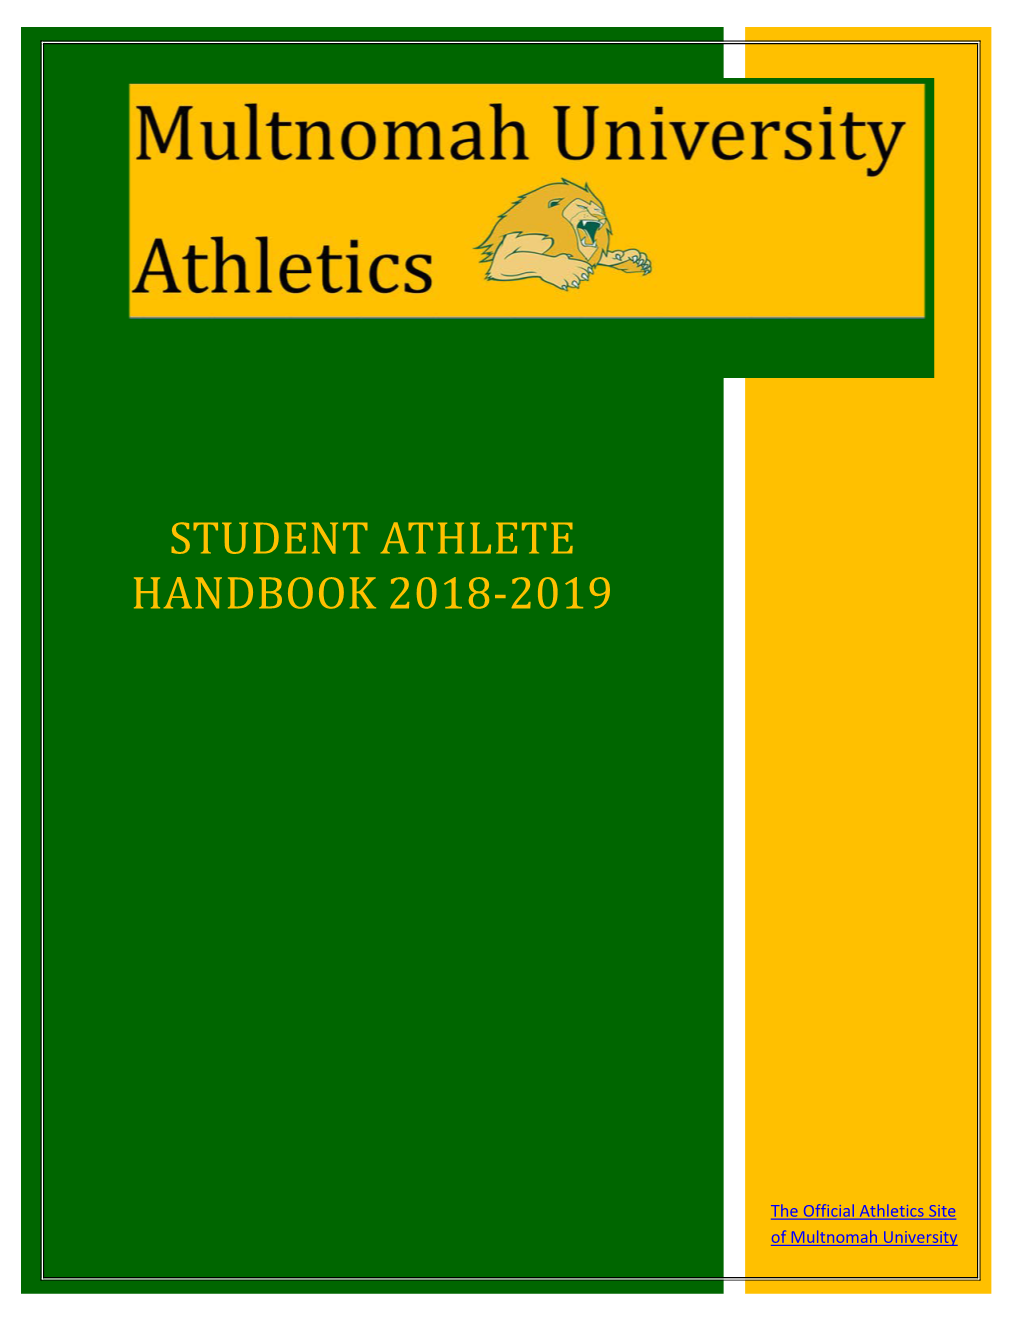 Student Athlete Handbook 2018-2019